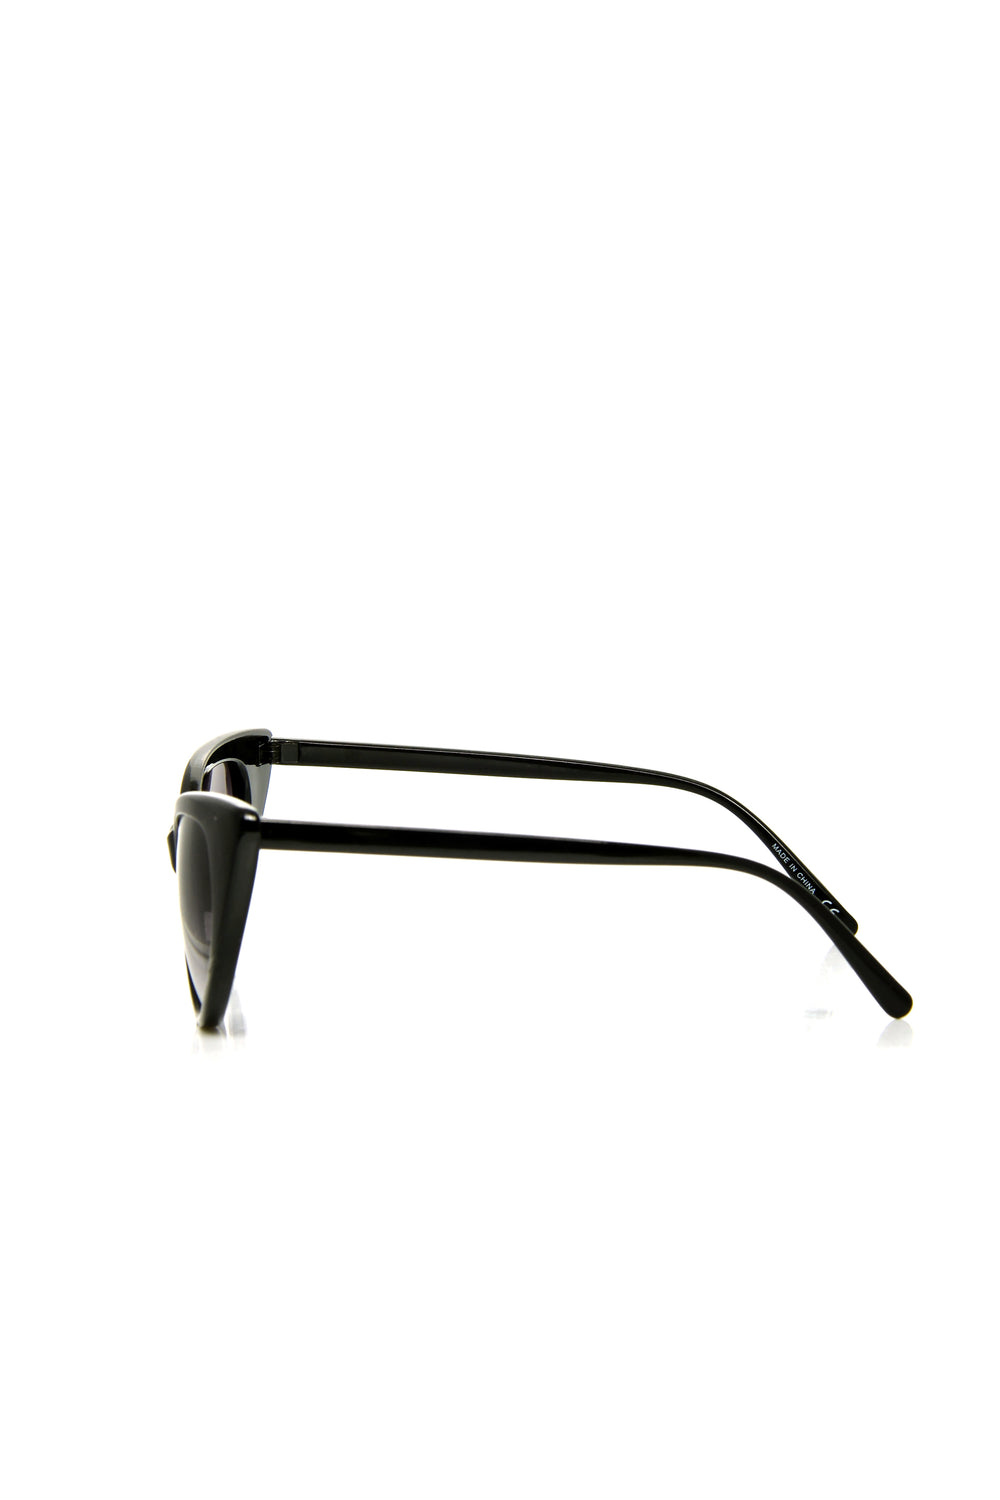 Mazo Beach Sunglasses - Black